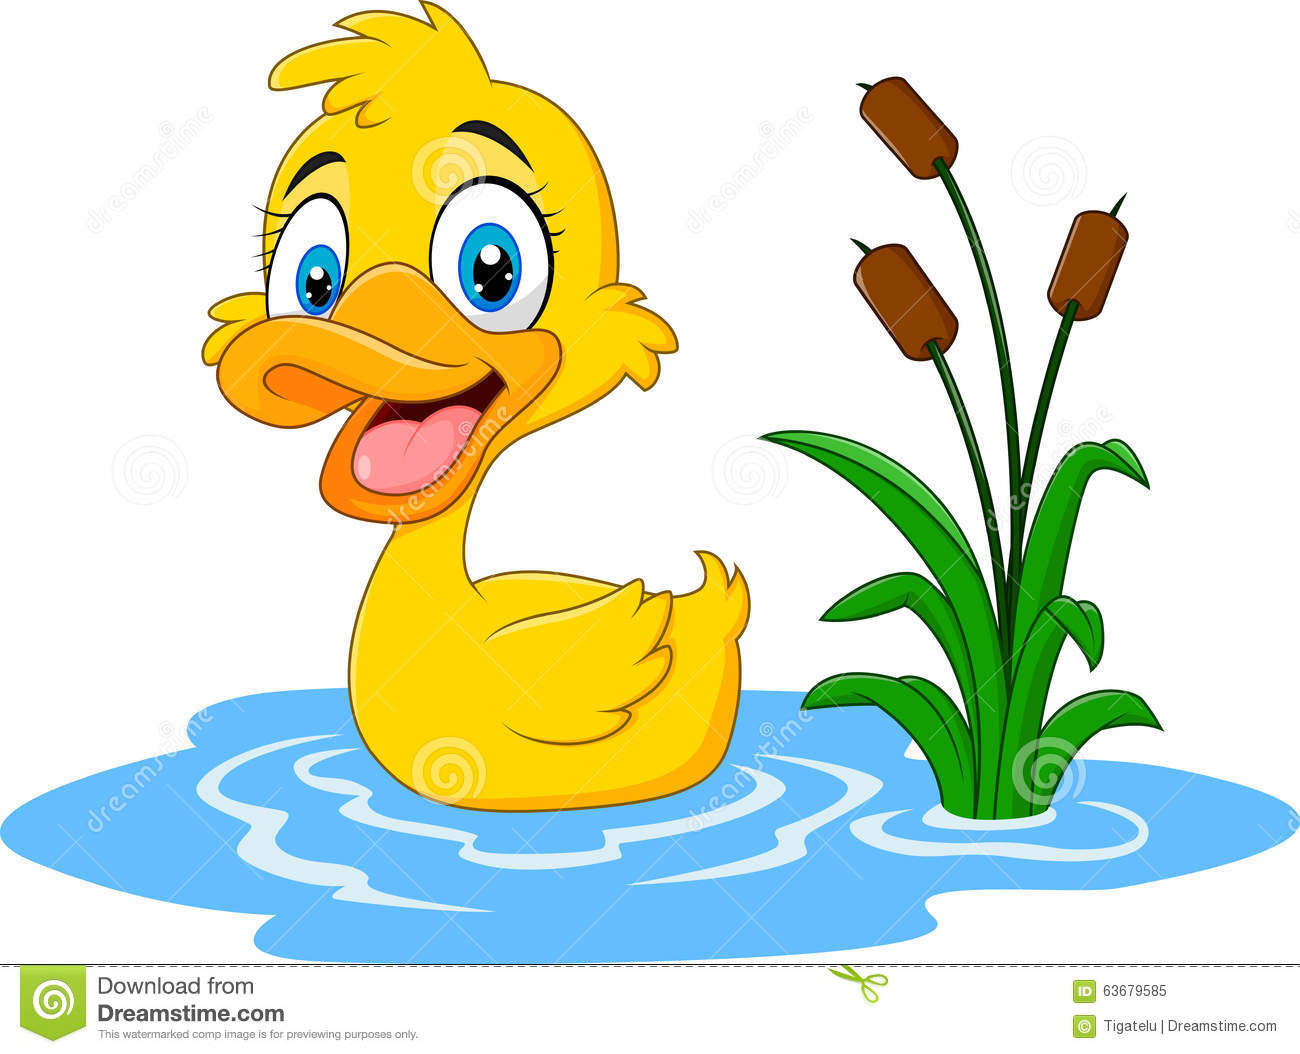 Duck in water clipart.